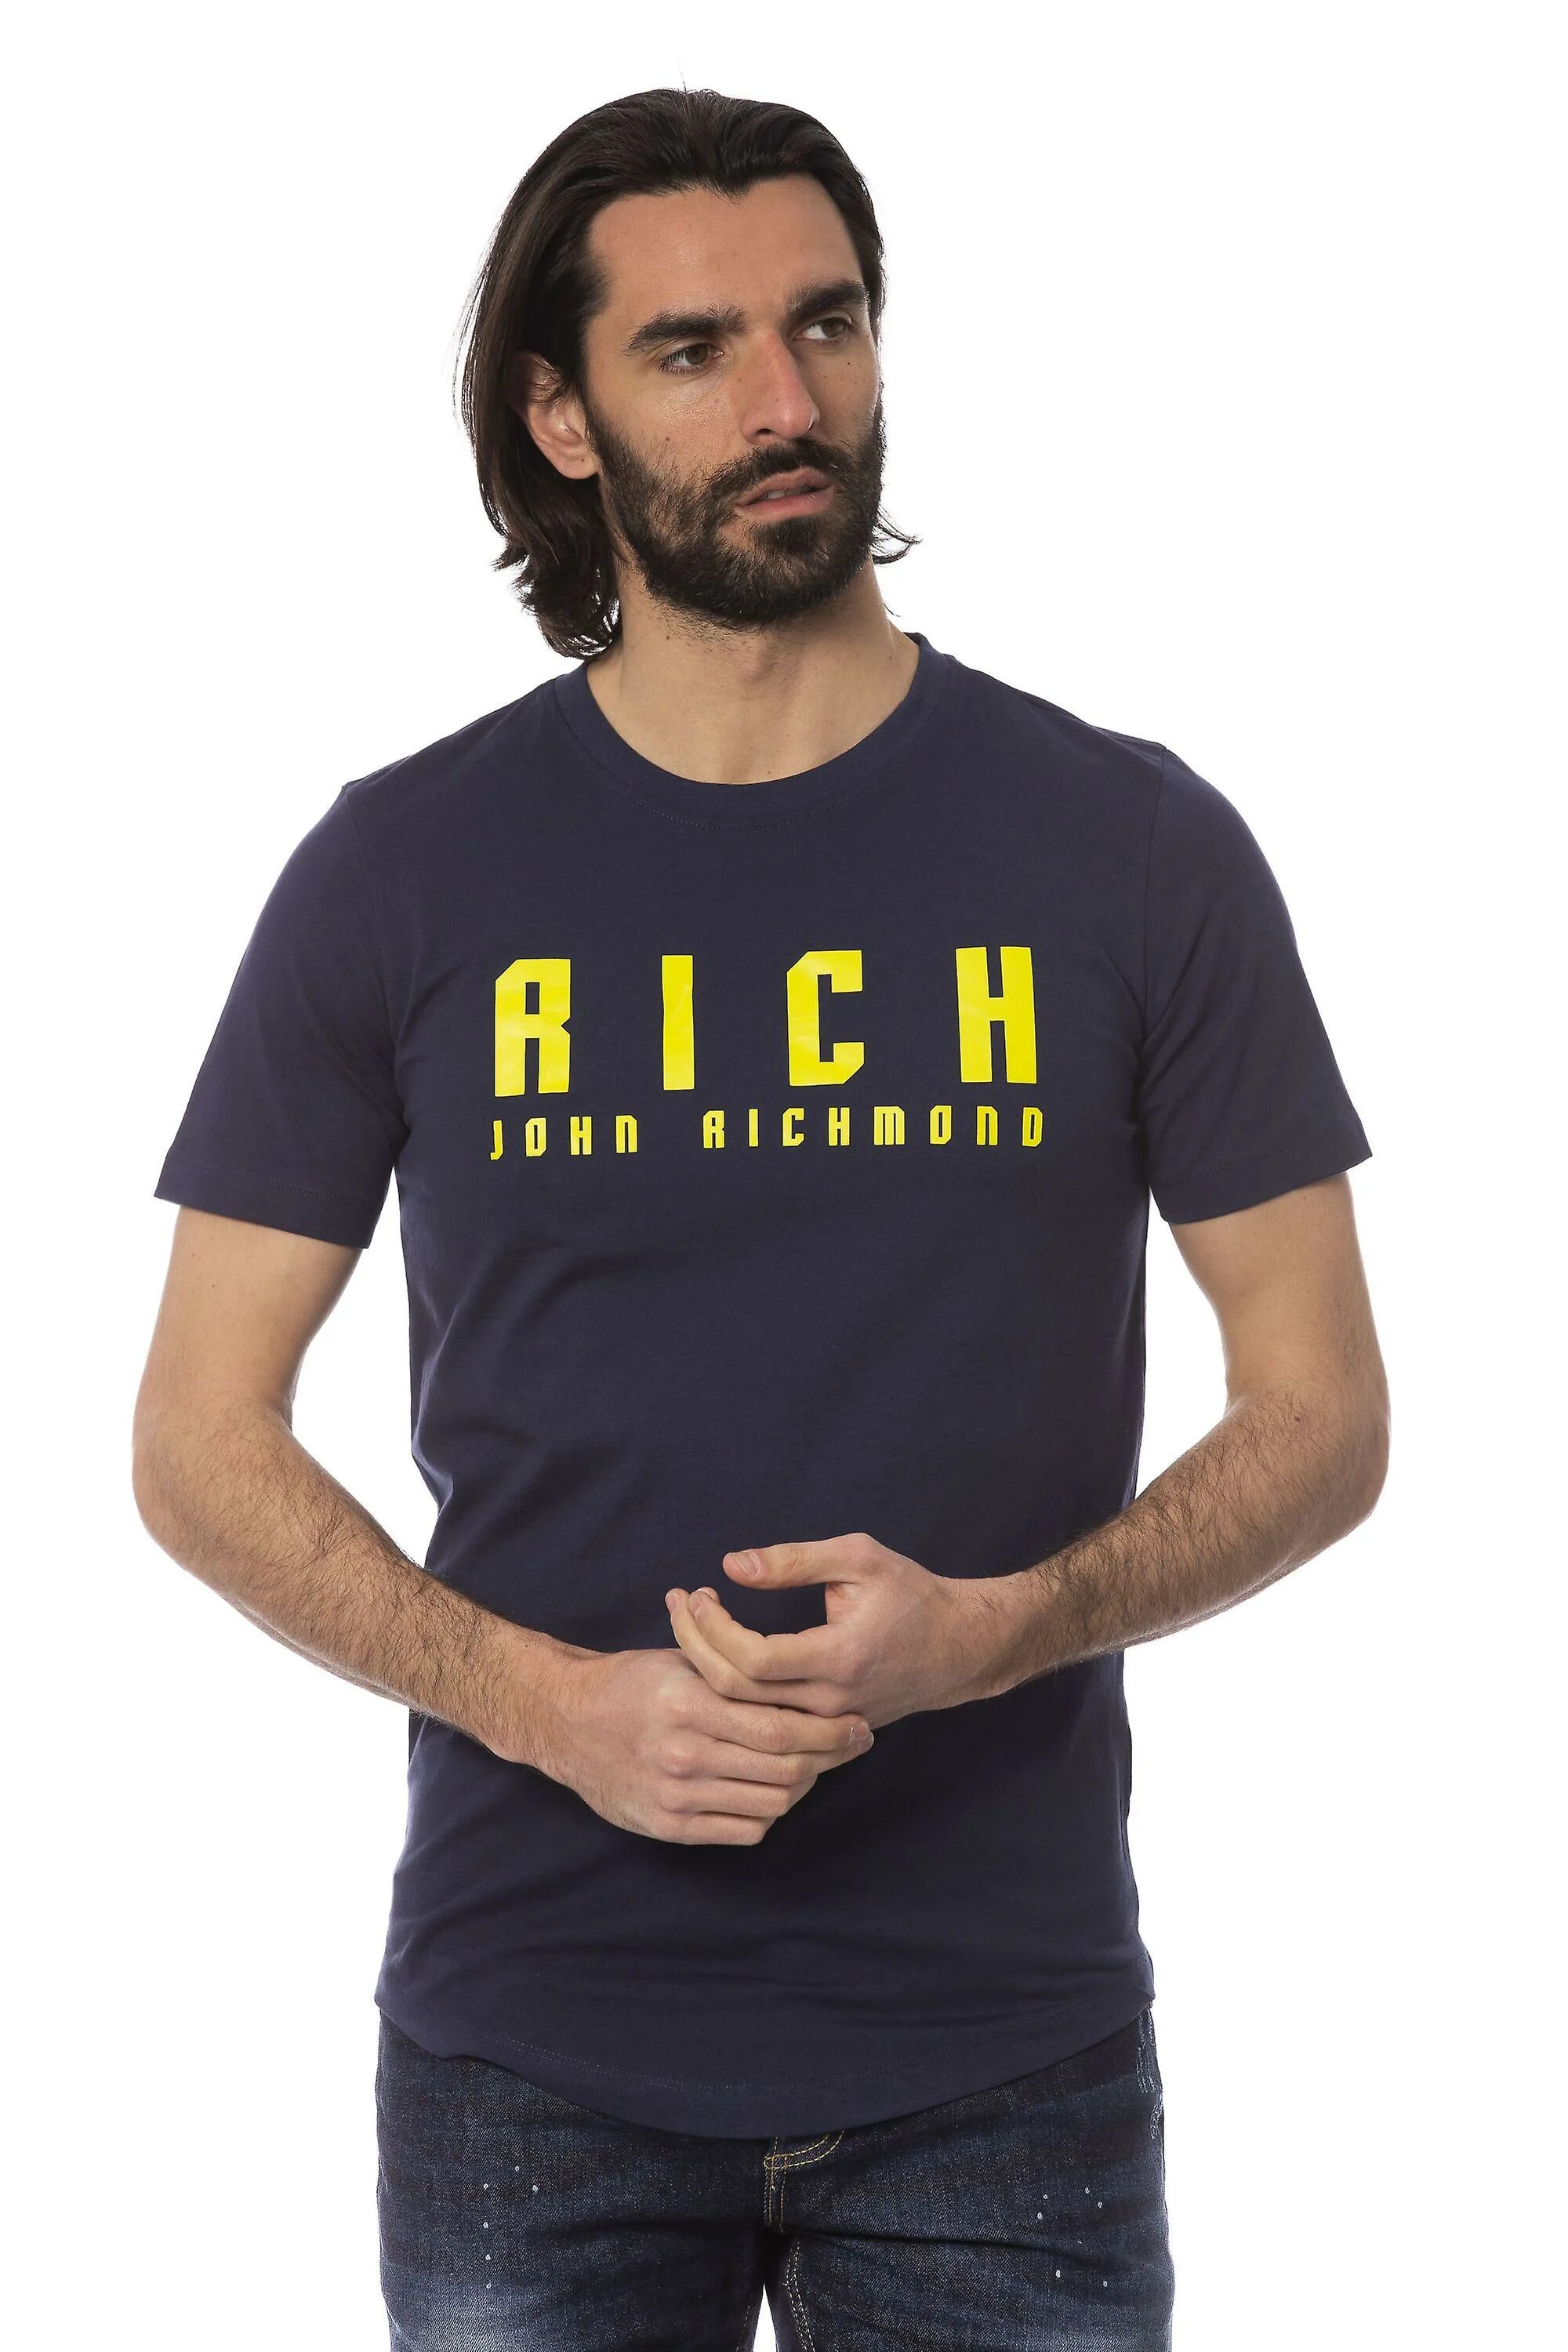 Richmond man. John Richmond футболка. Майка Джон Ричмонд мужская. Джон Ричмонд футболка мужская. Richmond майка мужская.